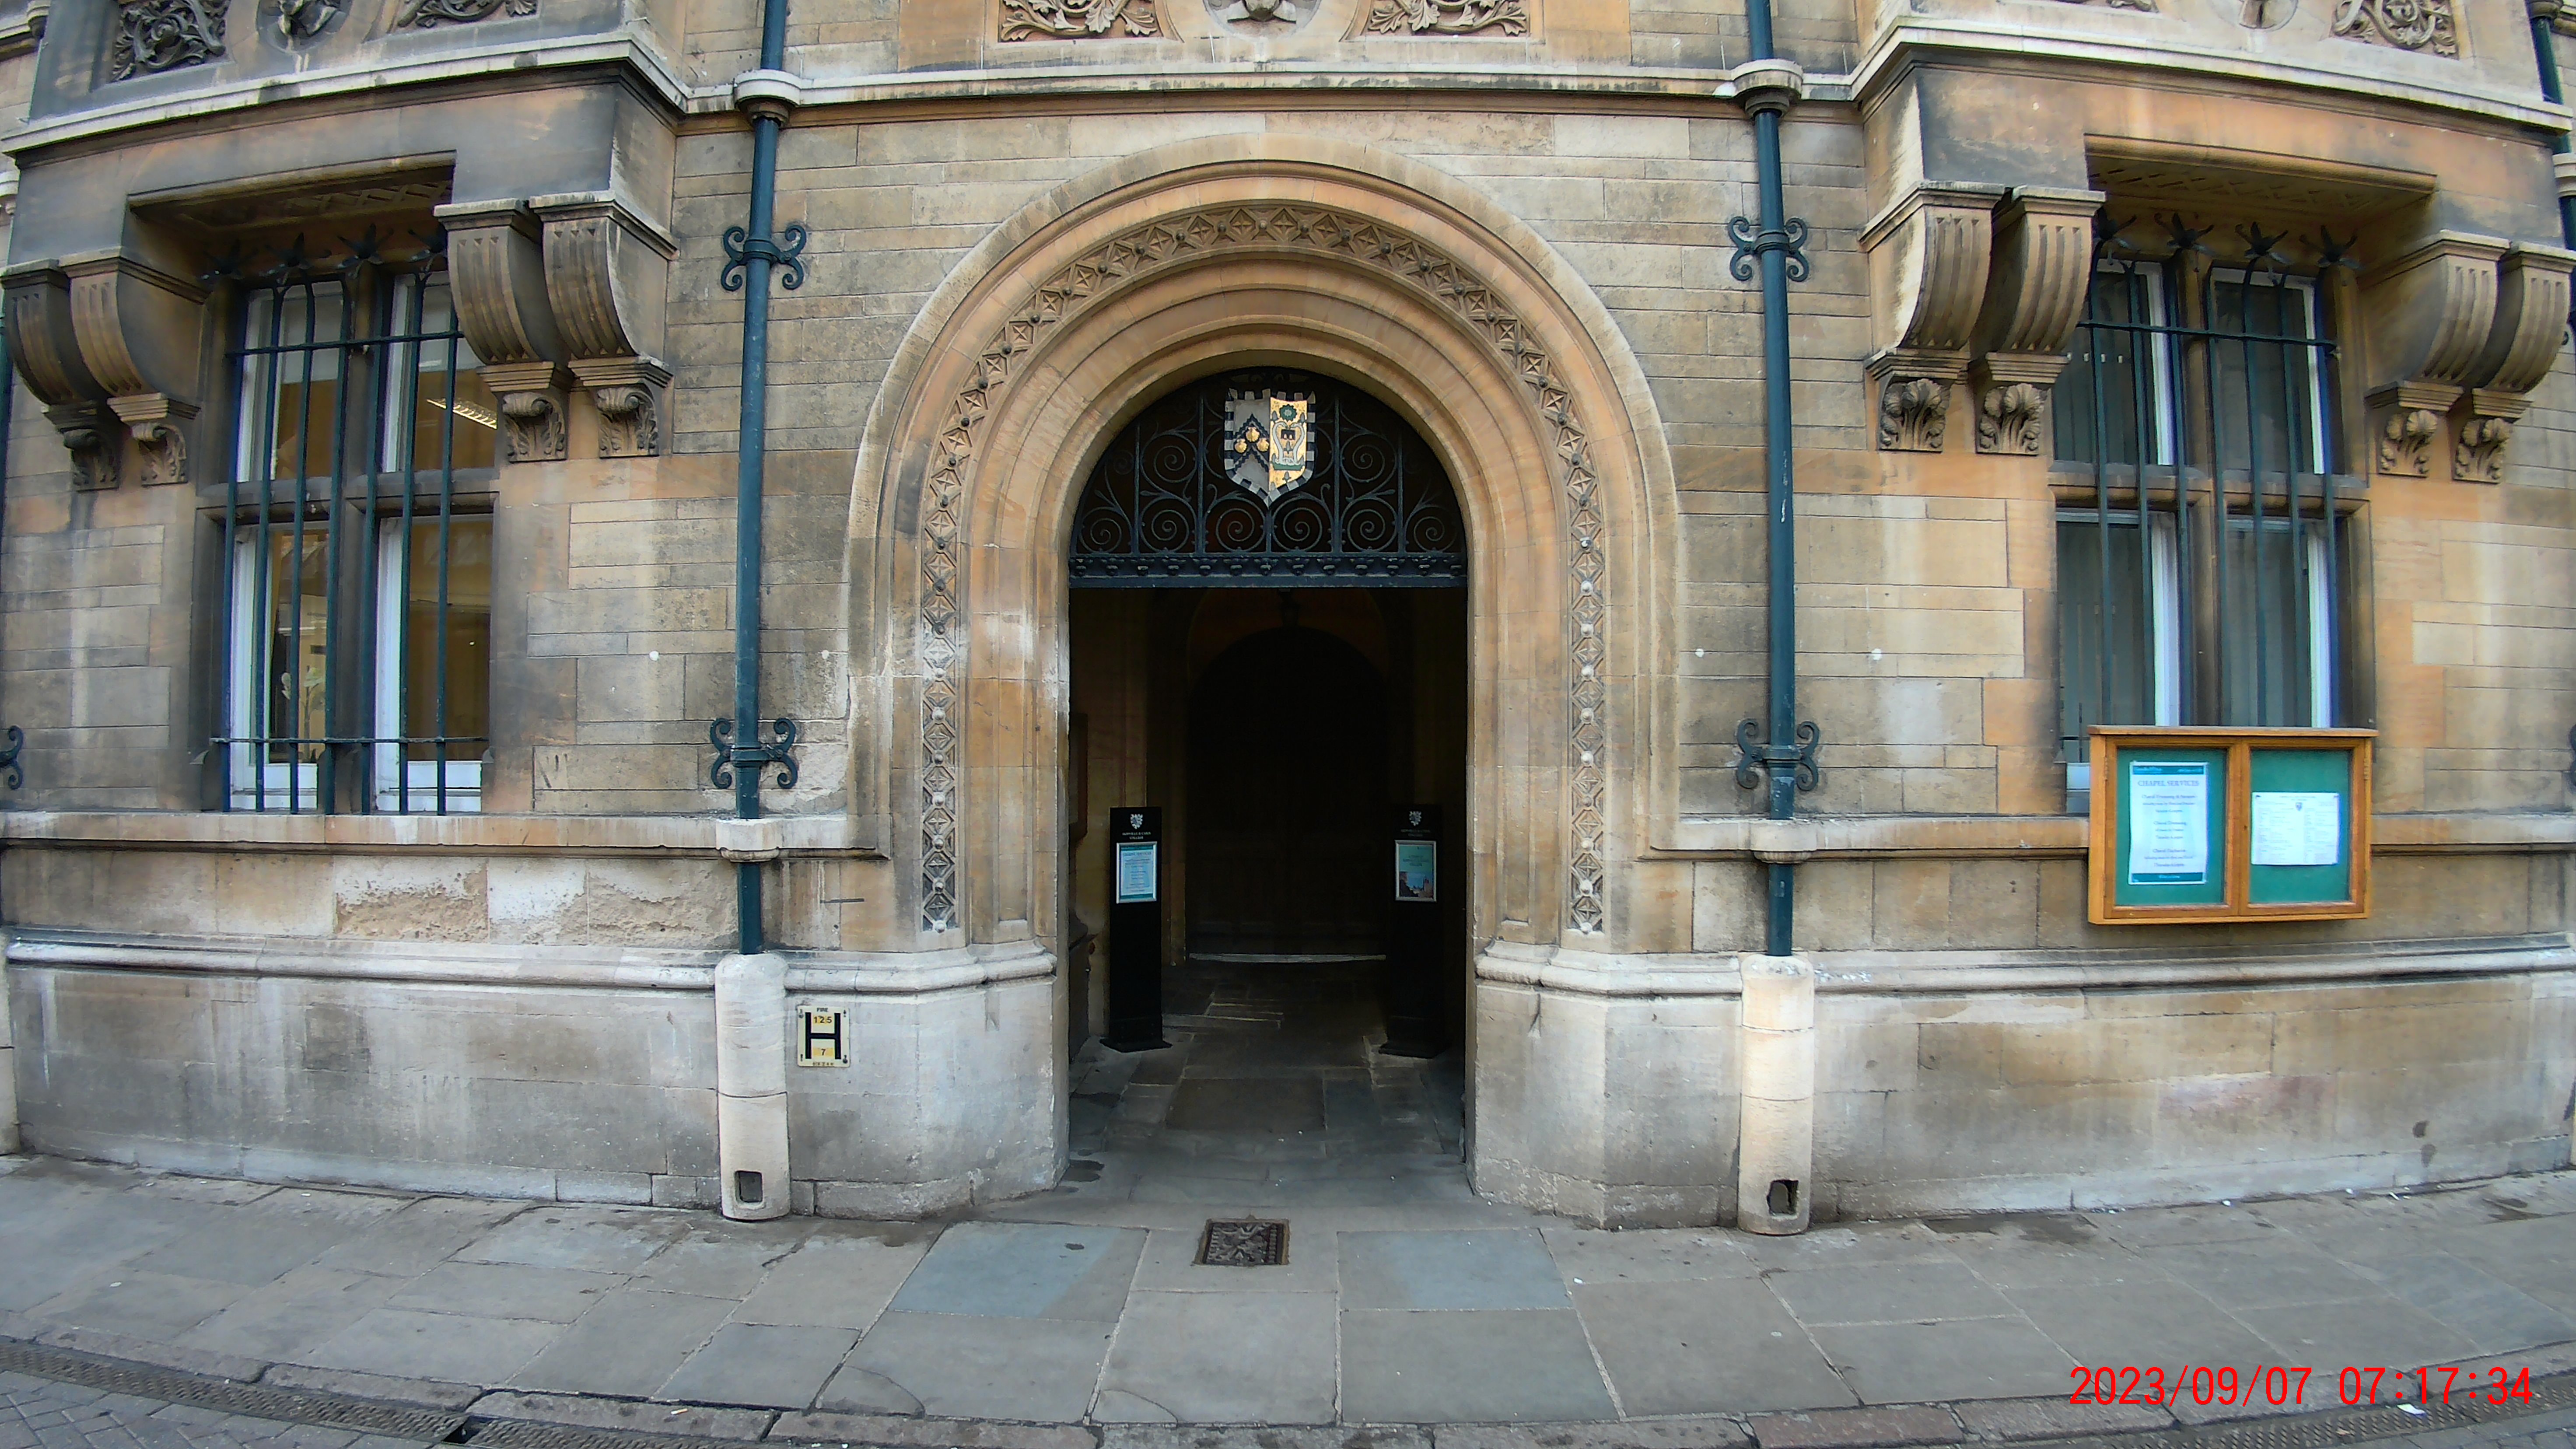 Photo of a Cambridge University building taken with the SJCAM SJ20 action camera